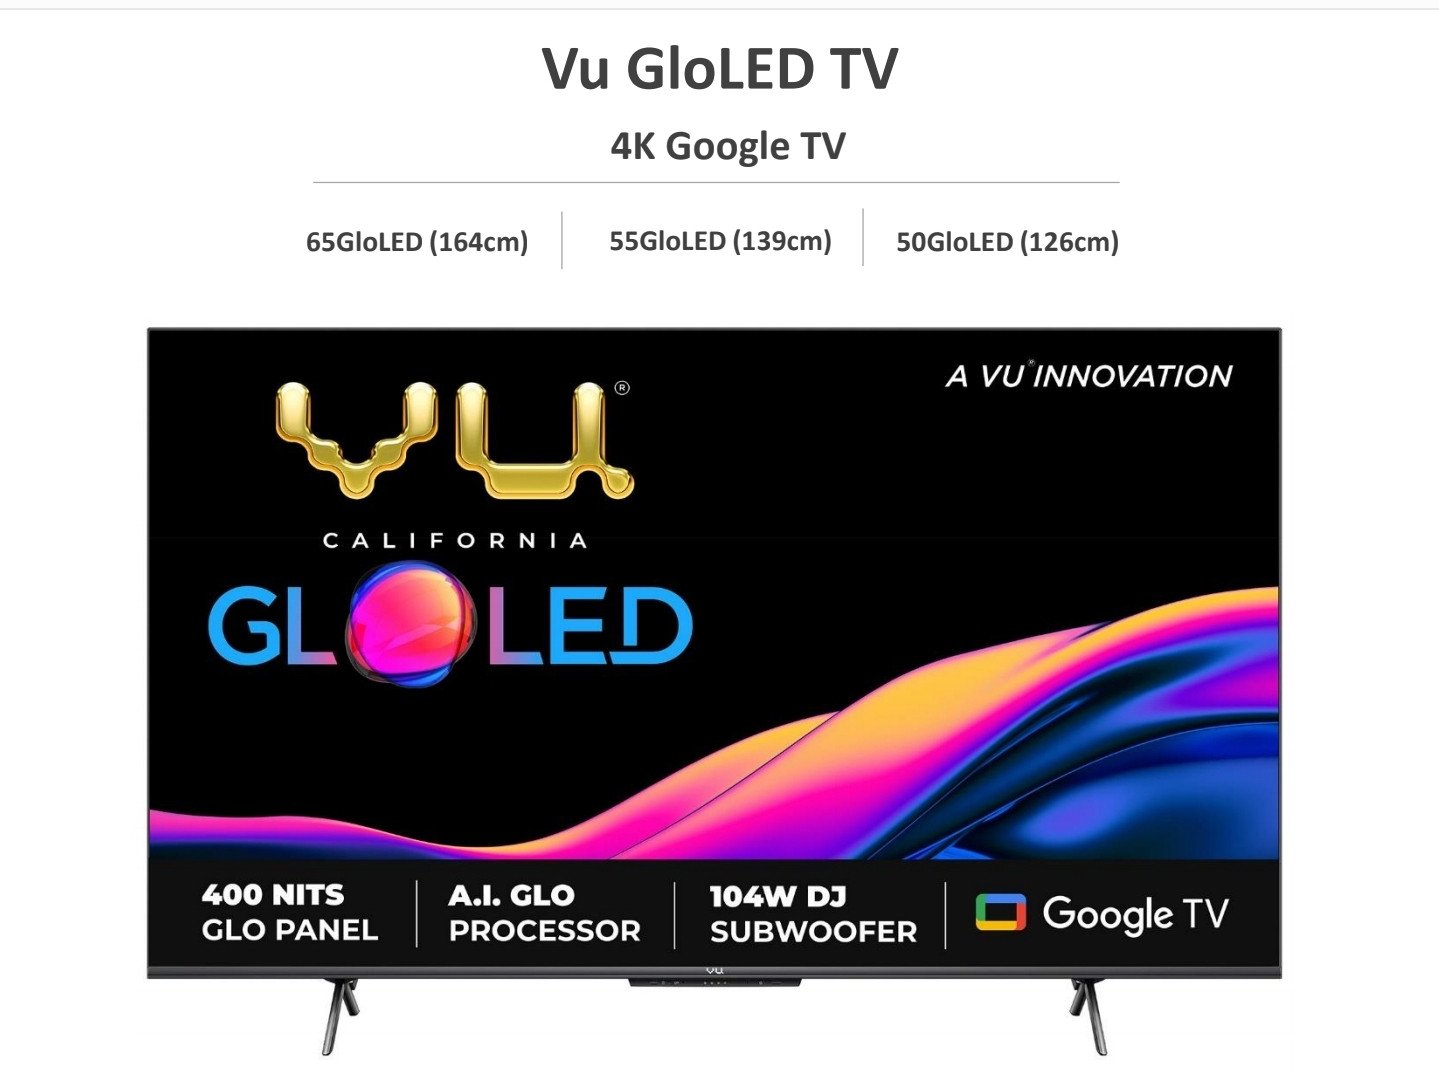 Vu GloLED TV 65GloLED (164cm) 4K Google TV